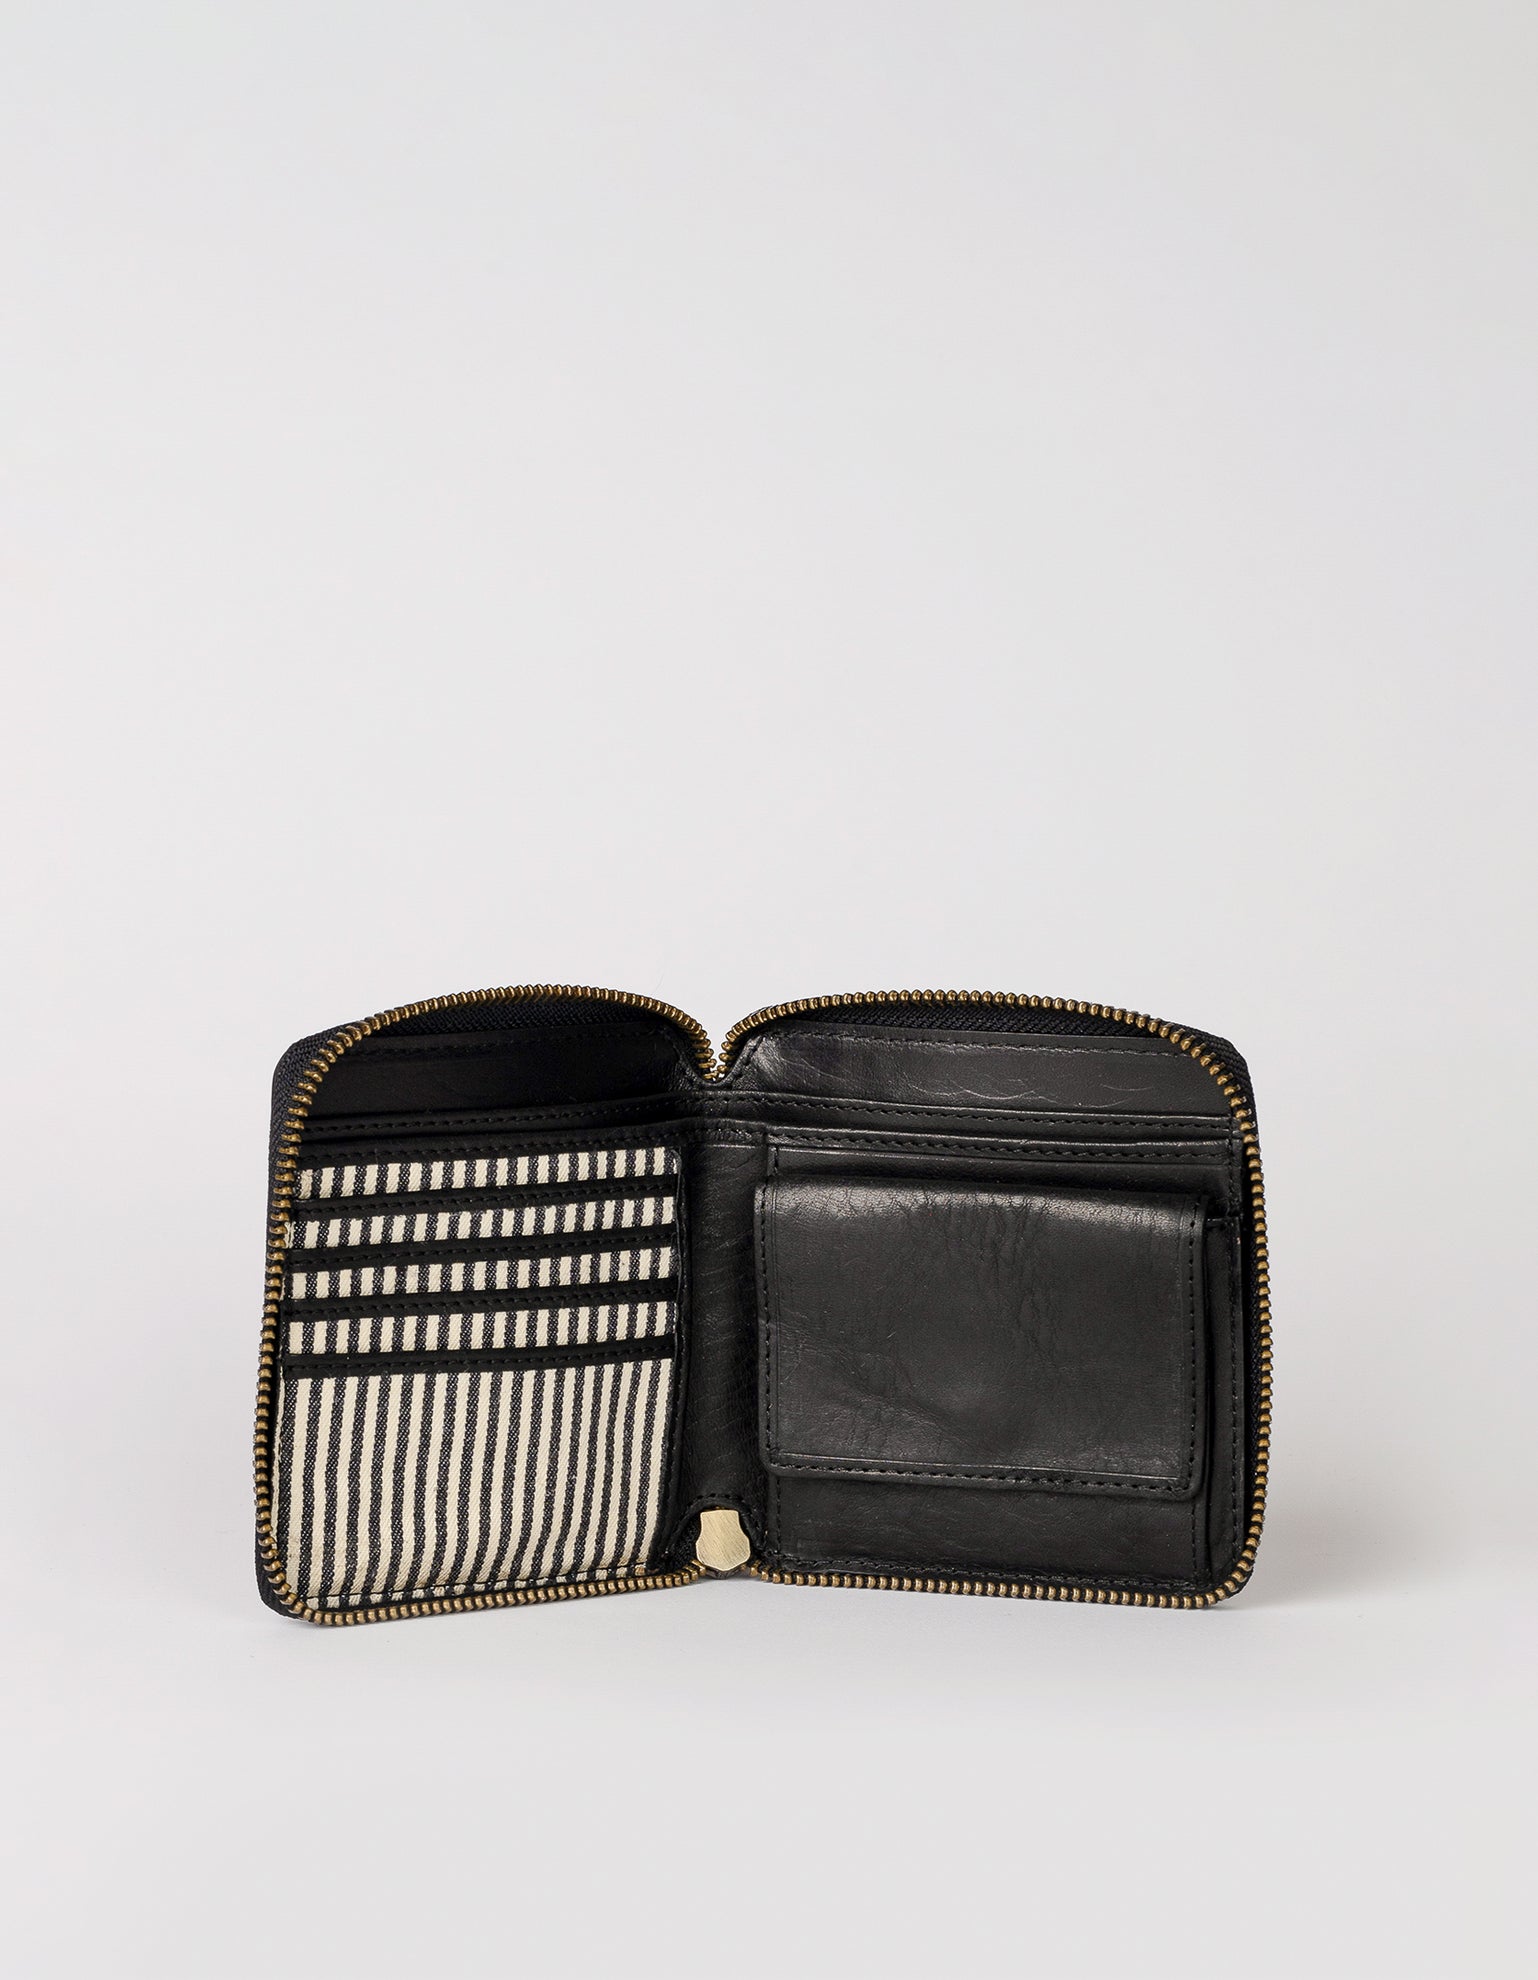 Sonny Square Wallet Black Stromboli Leather - Inside product image